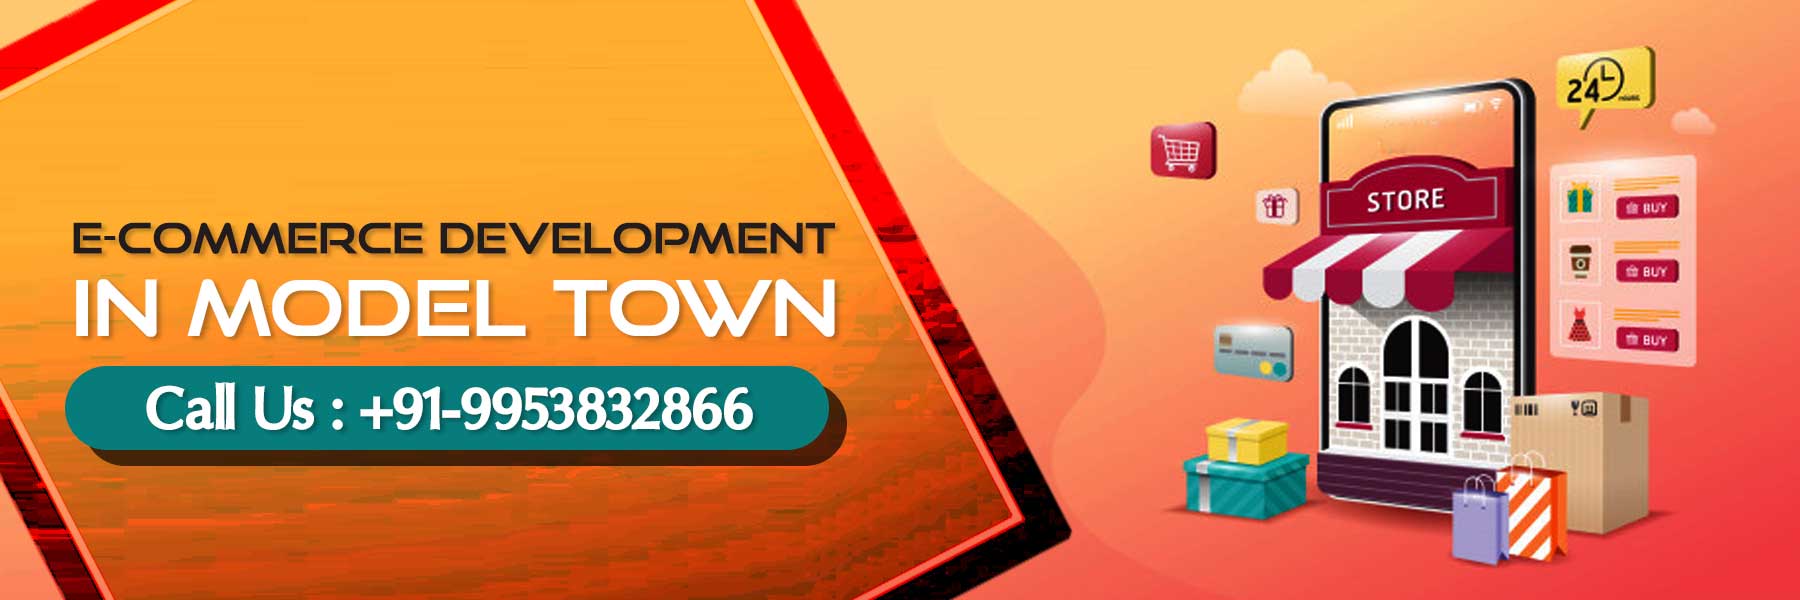 ecommerce development in Model Town